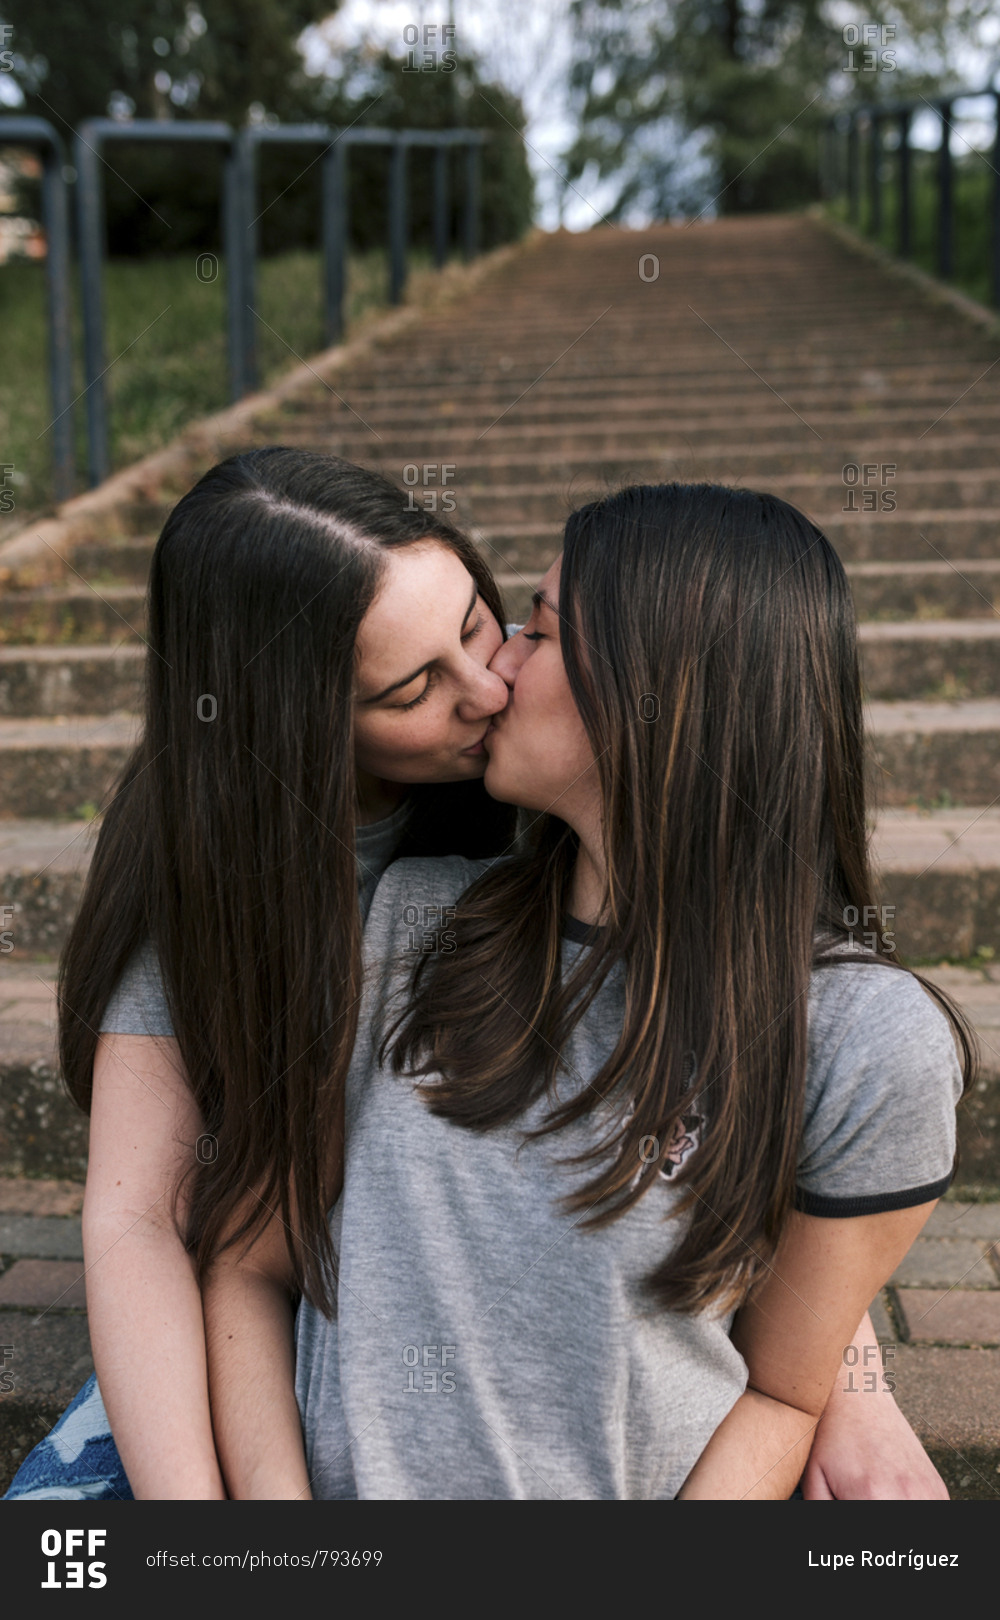 lesbian college girls kissing sexy video pics